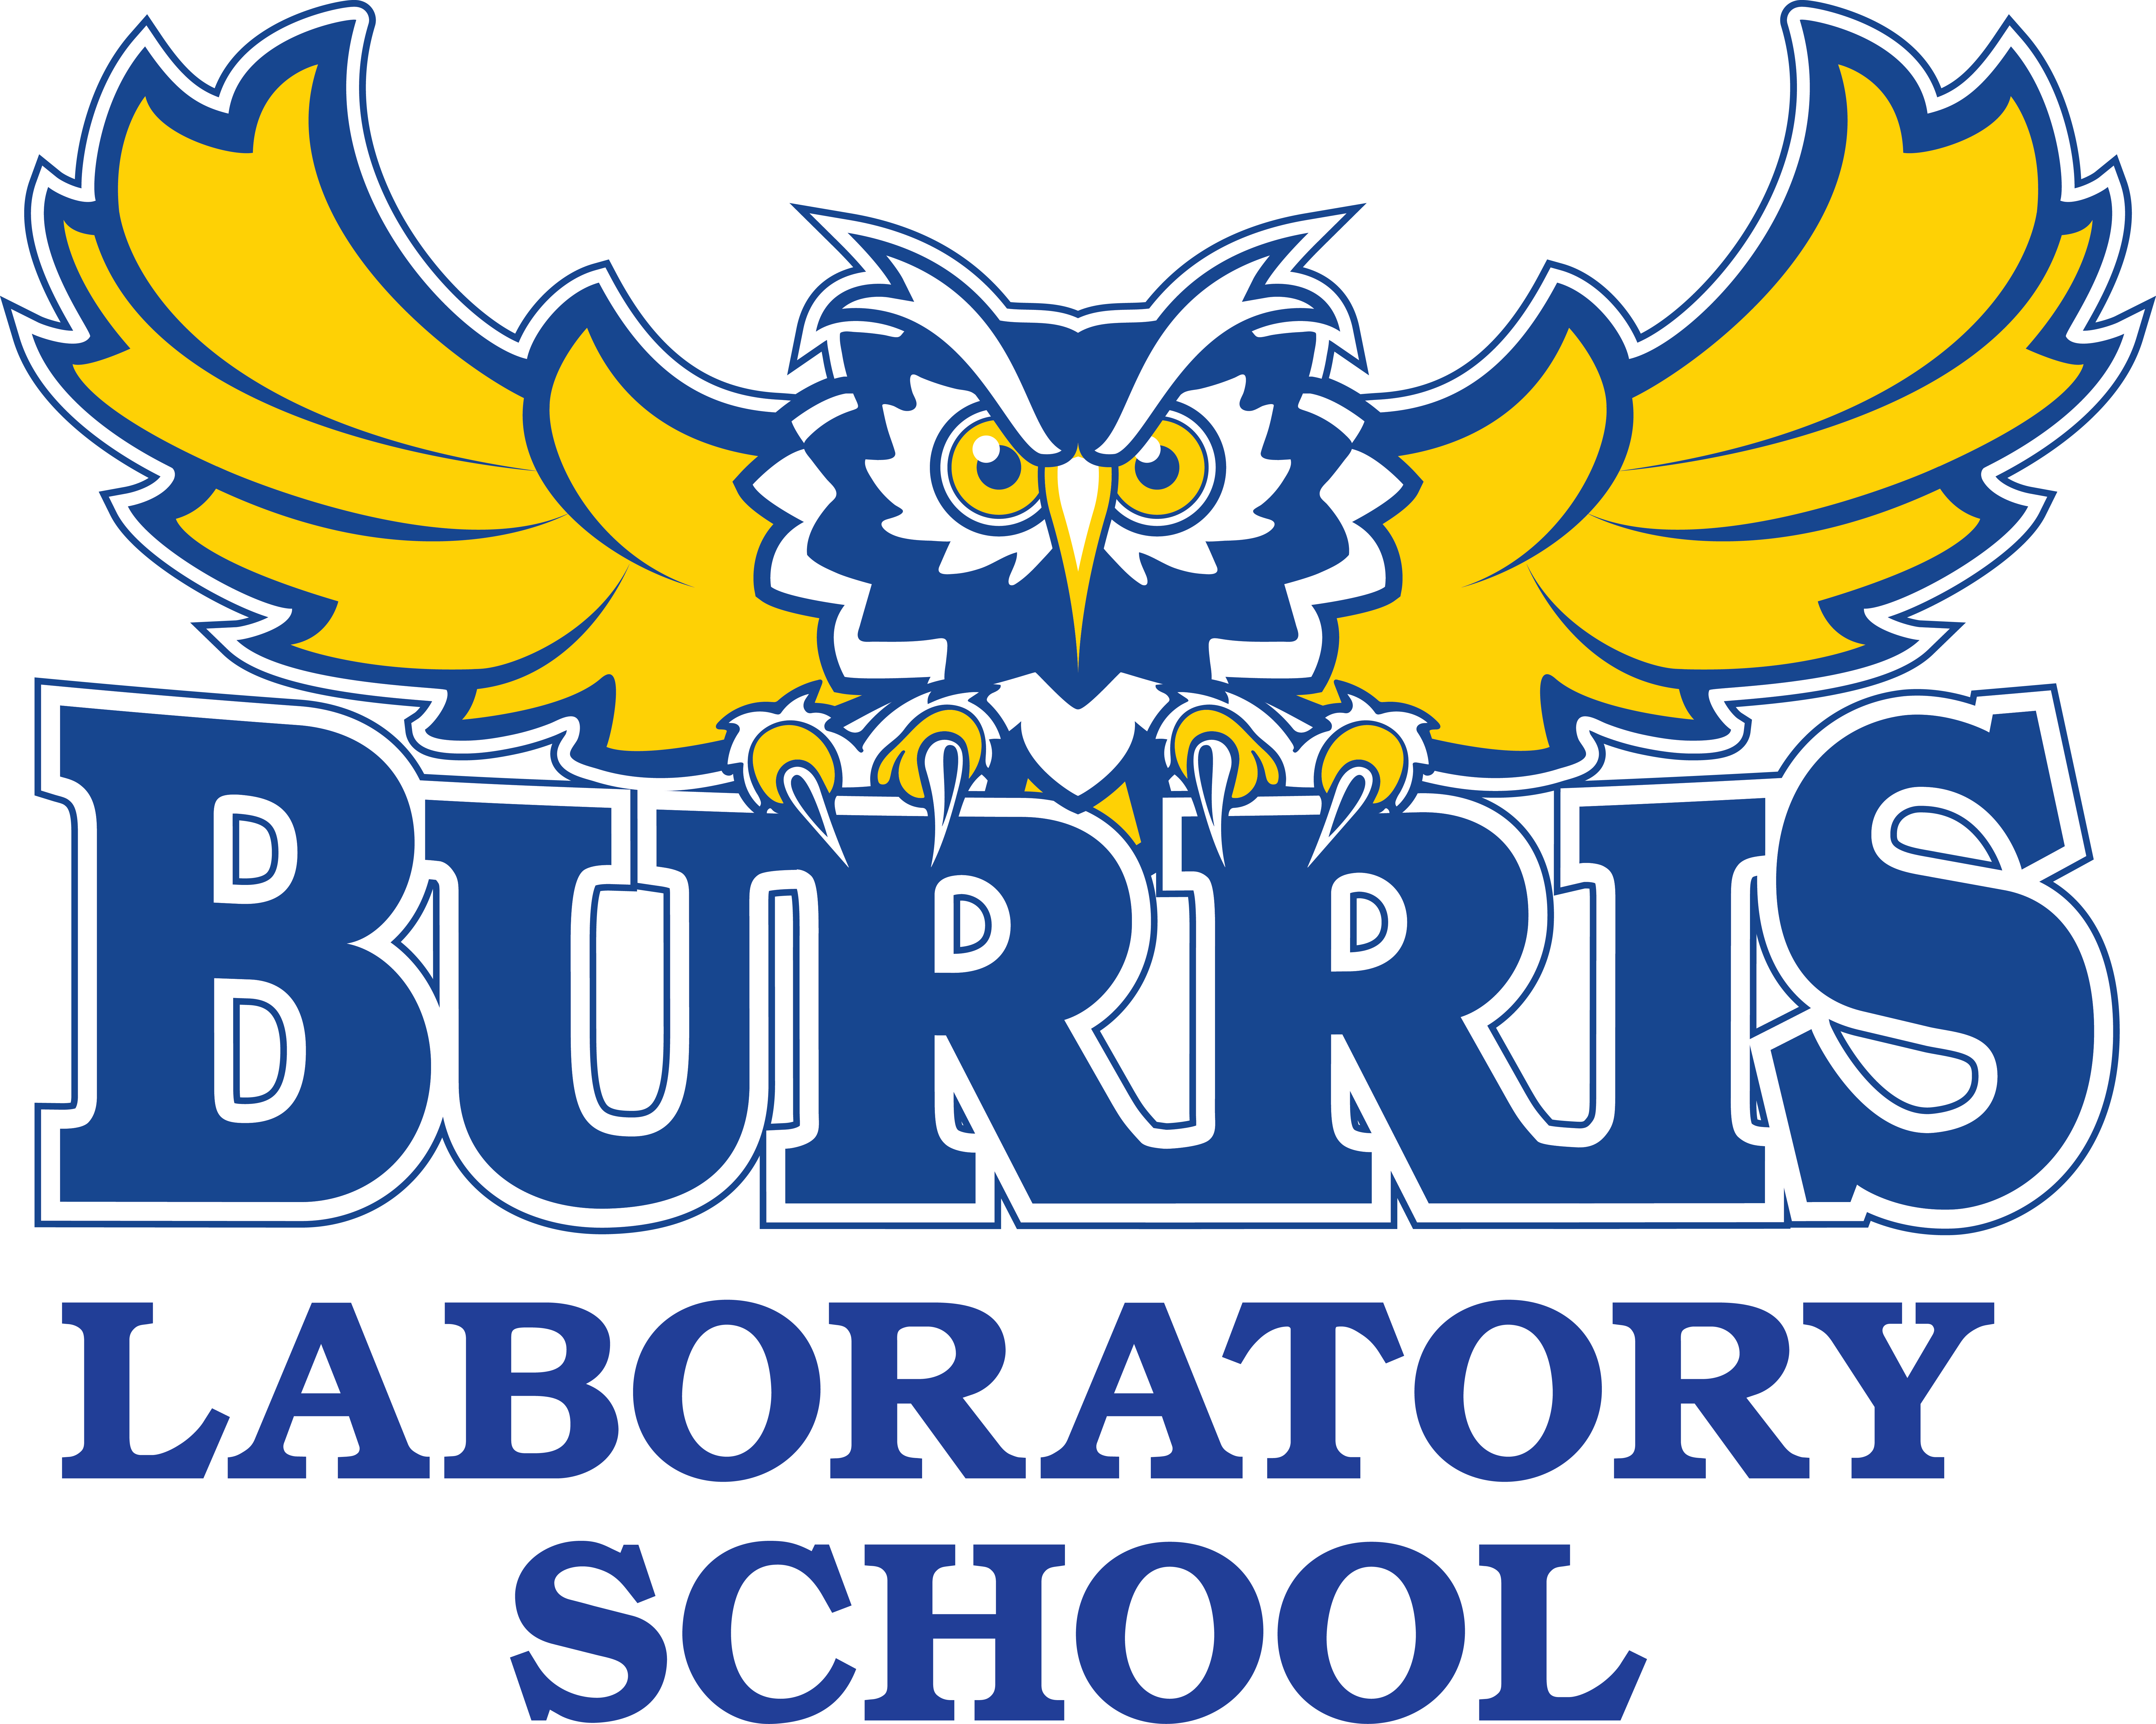 Burris Laboratory School 1441 Indiana 